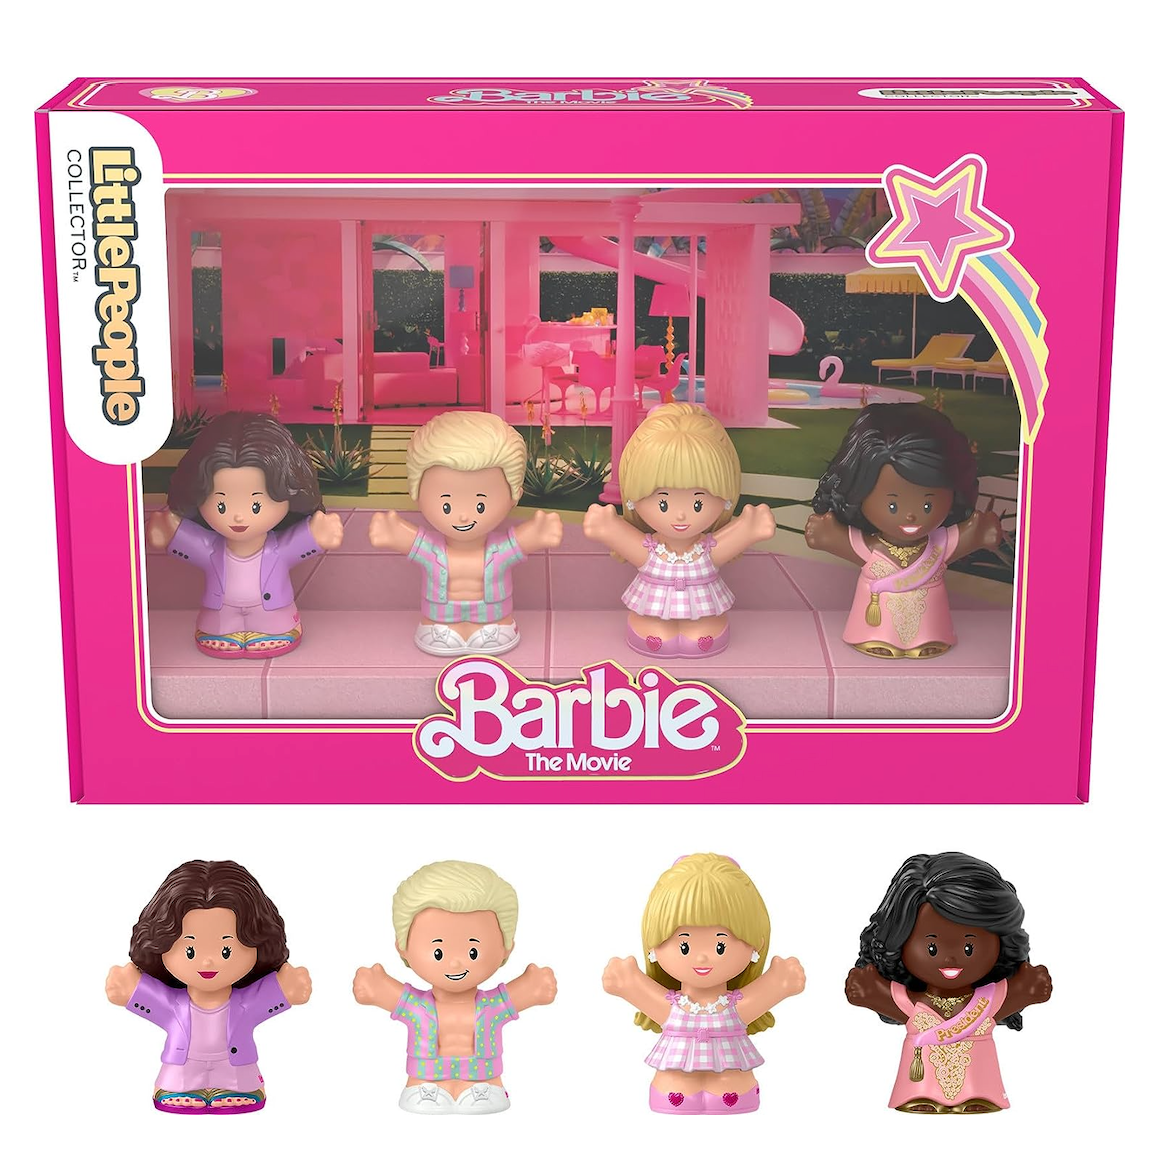 Barbie Toys On Sale! Black Friday Prices Start NOW!